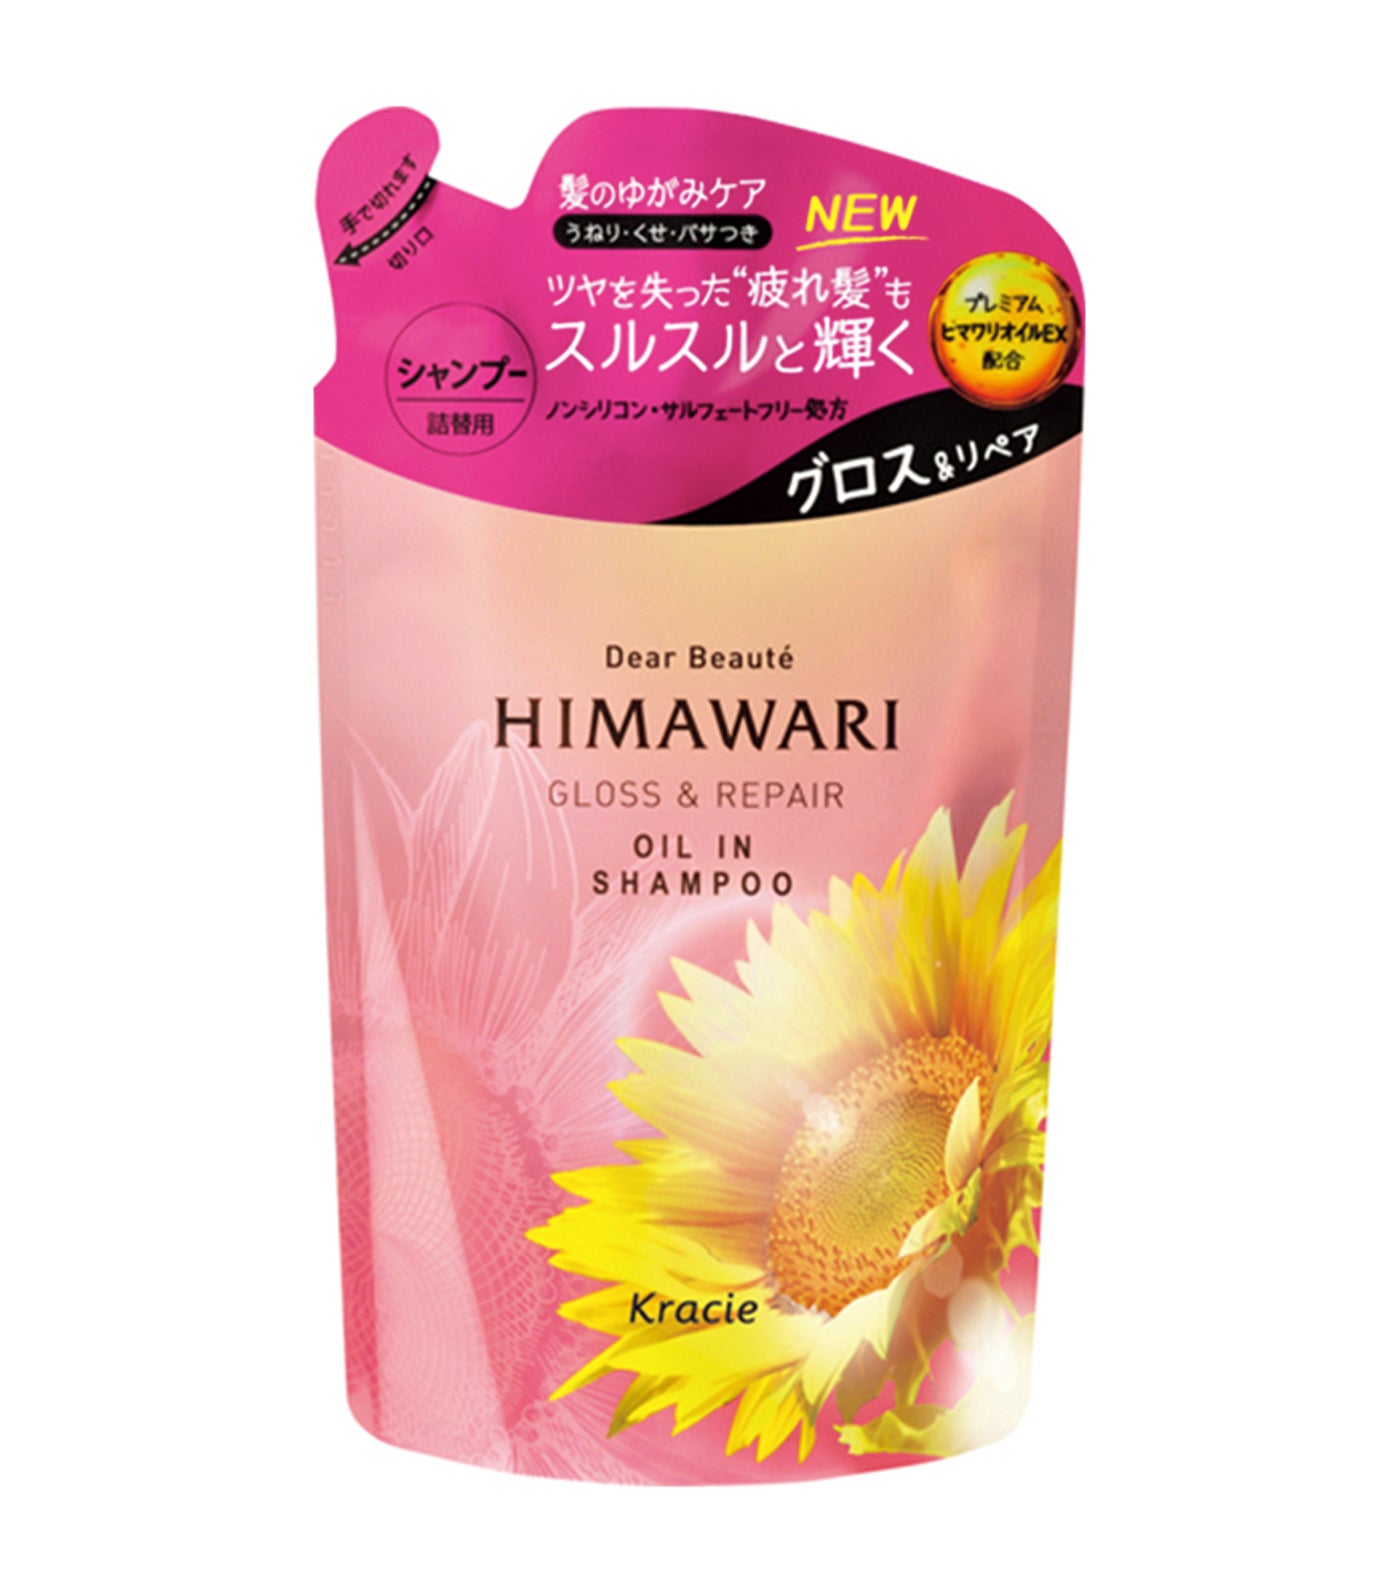 Dear Beaute Himawari Gloss and Repair Oil in Shampoo Refill Pack